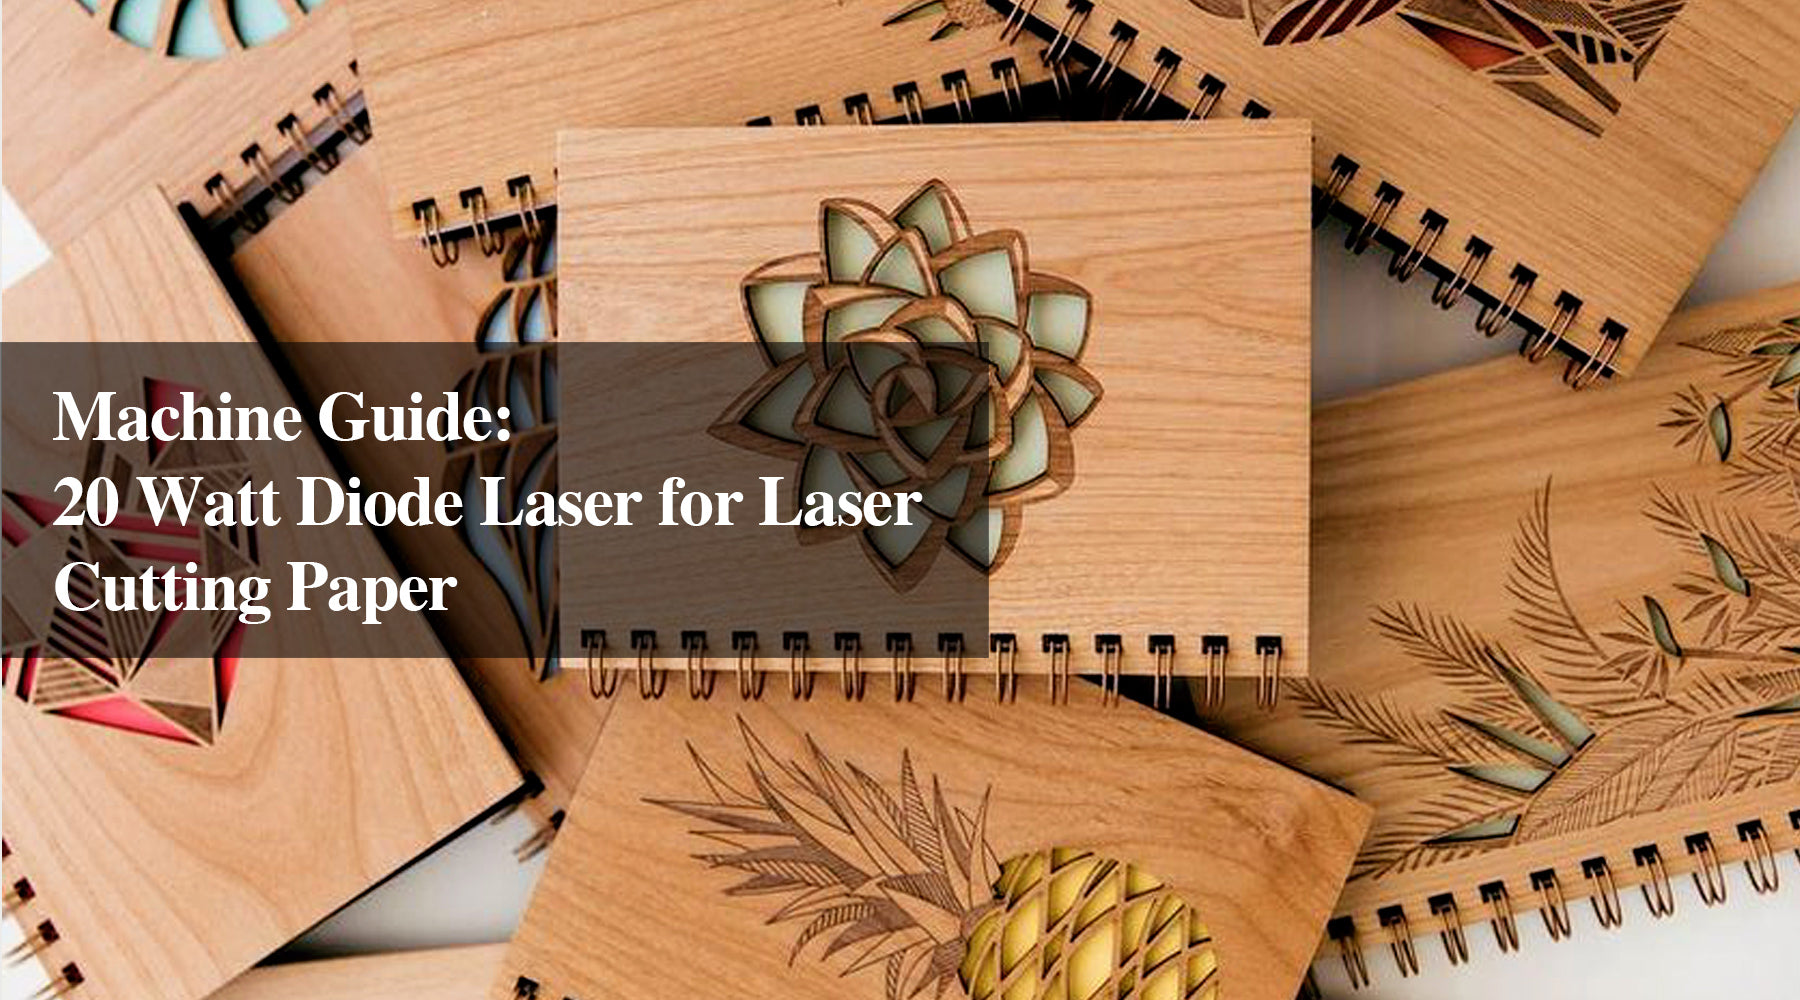 Machine Guide: 20 Watt Diode Laser for Laser Cutting Paper